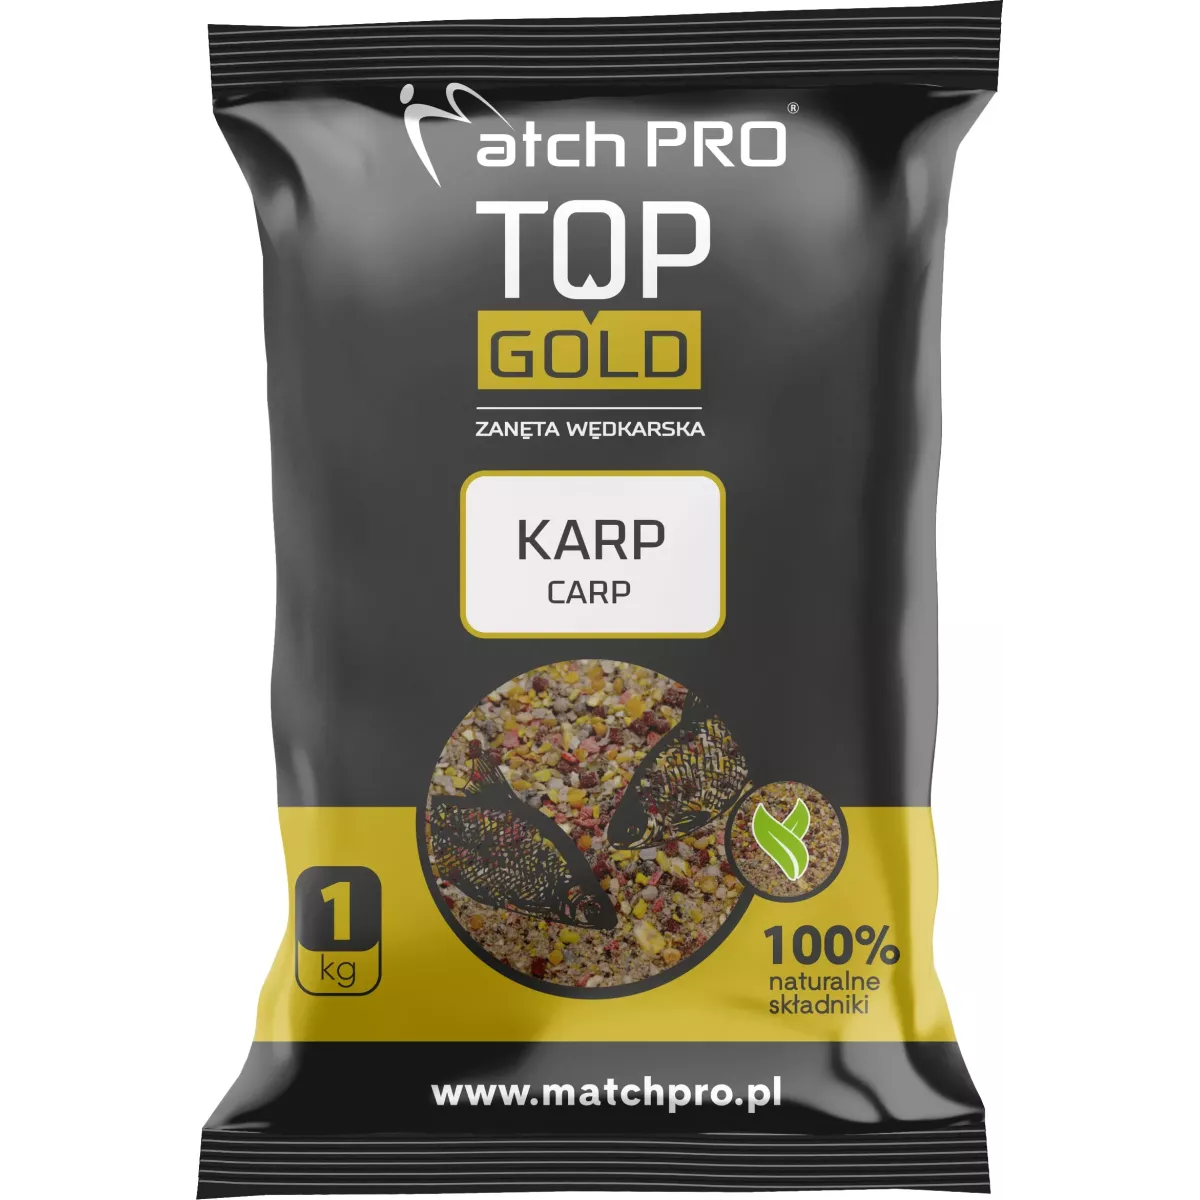 Zanęta MatchPro Top Gold 1kg - KARP